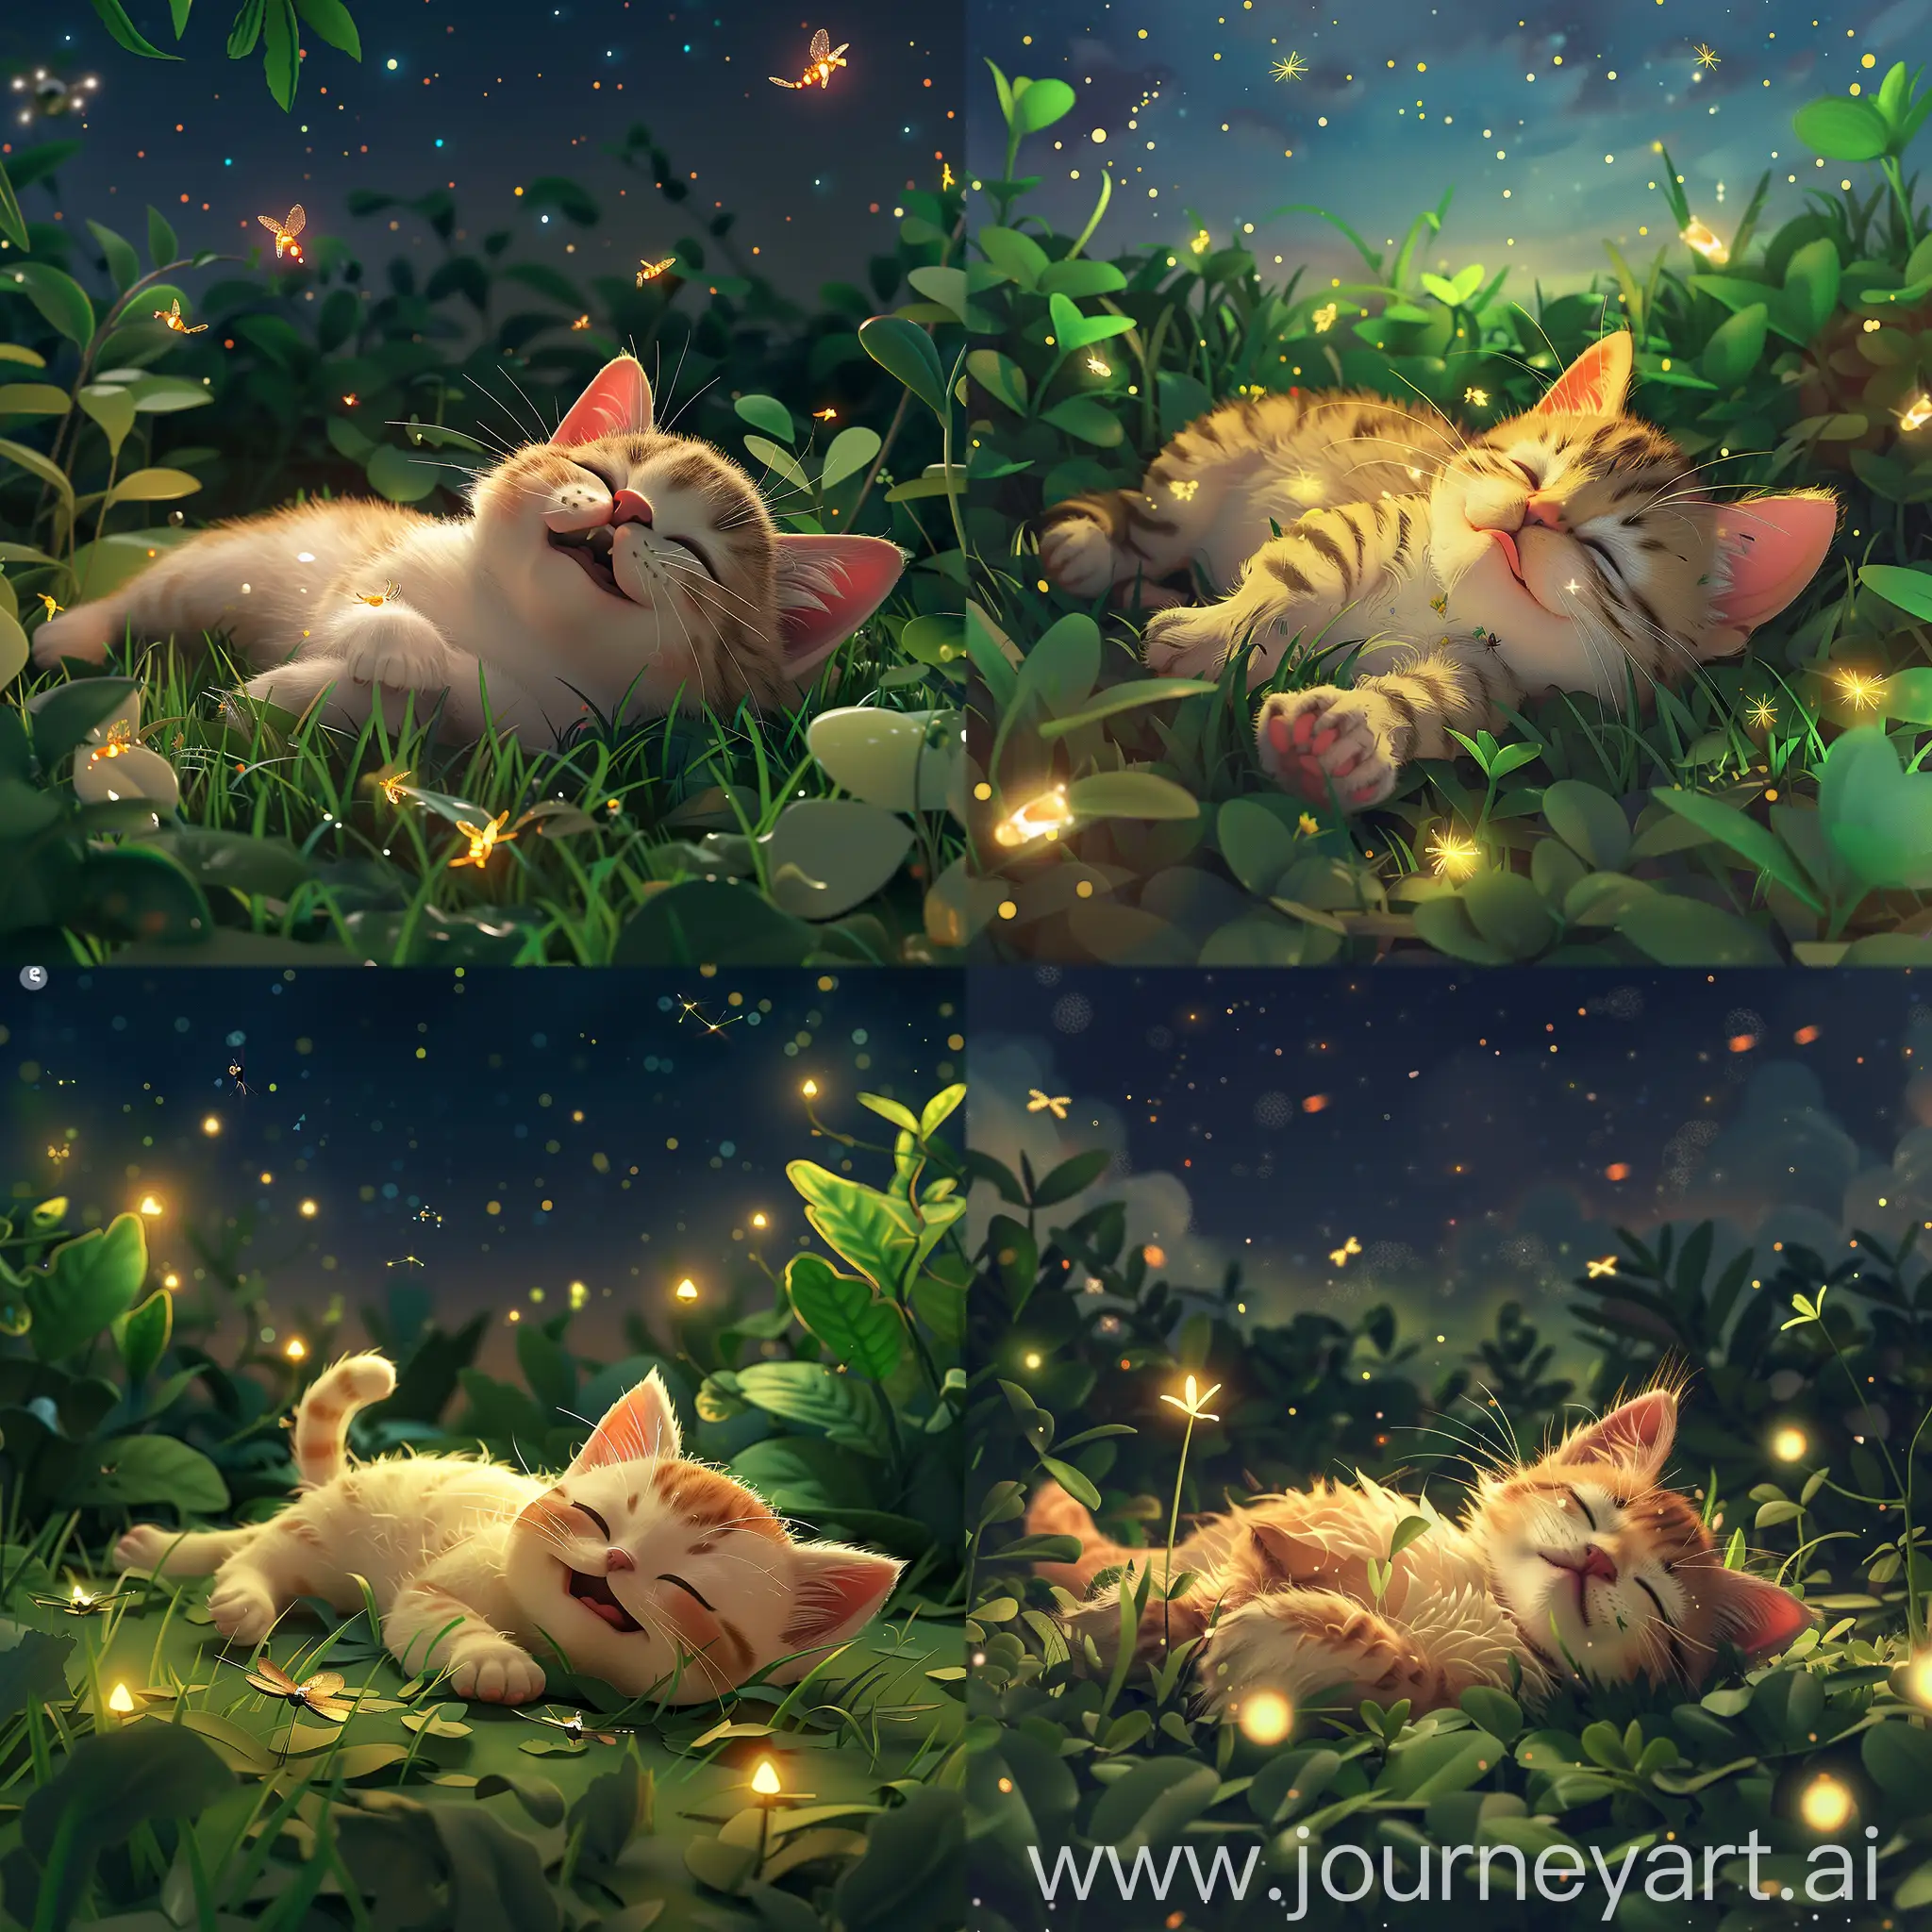 Cute-Sleeping-Cat-Among-Fireflies-and-Starry-Skies-in-Cartoon-Style